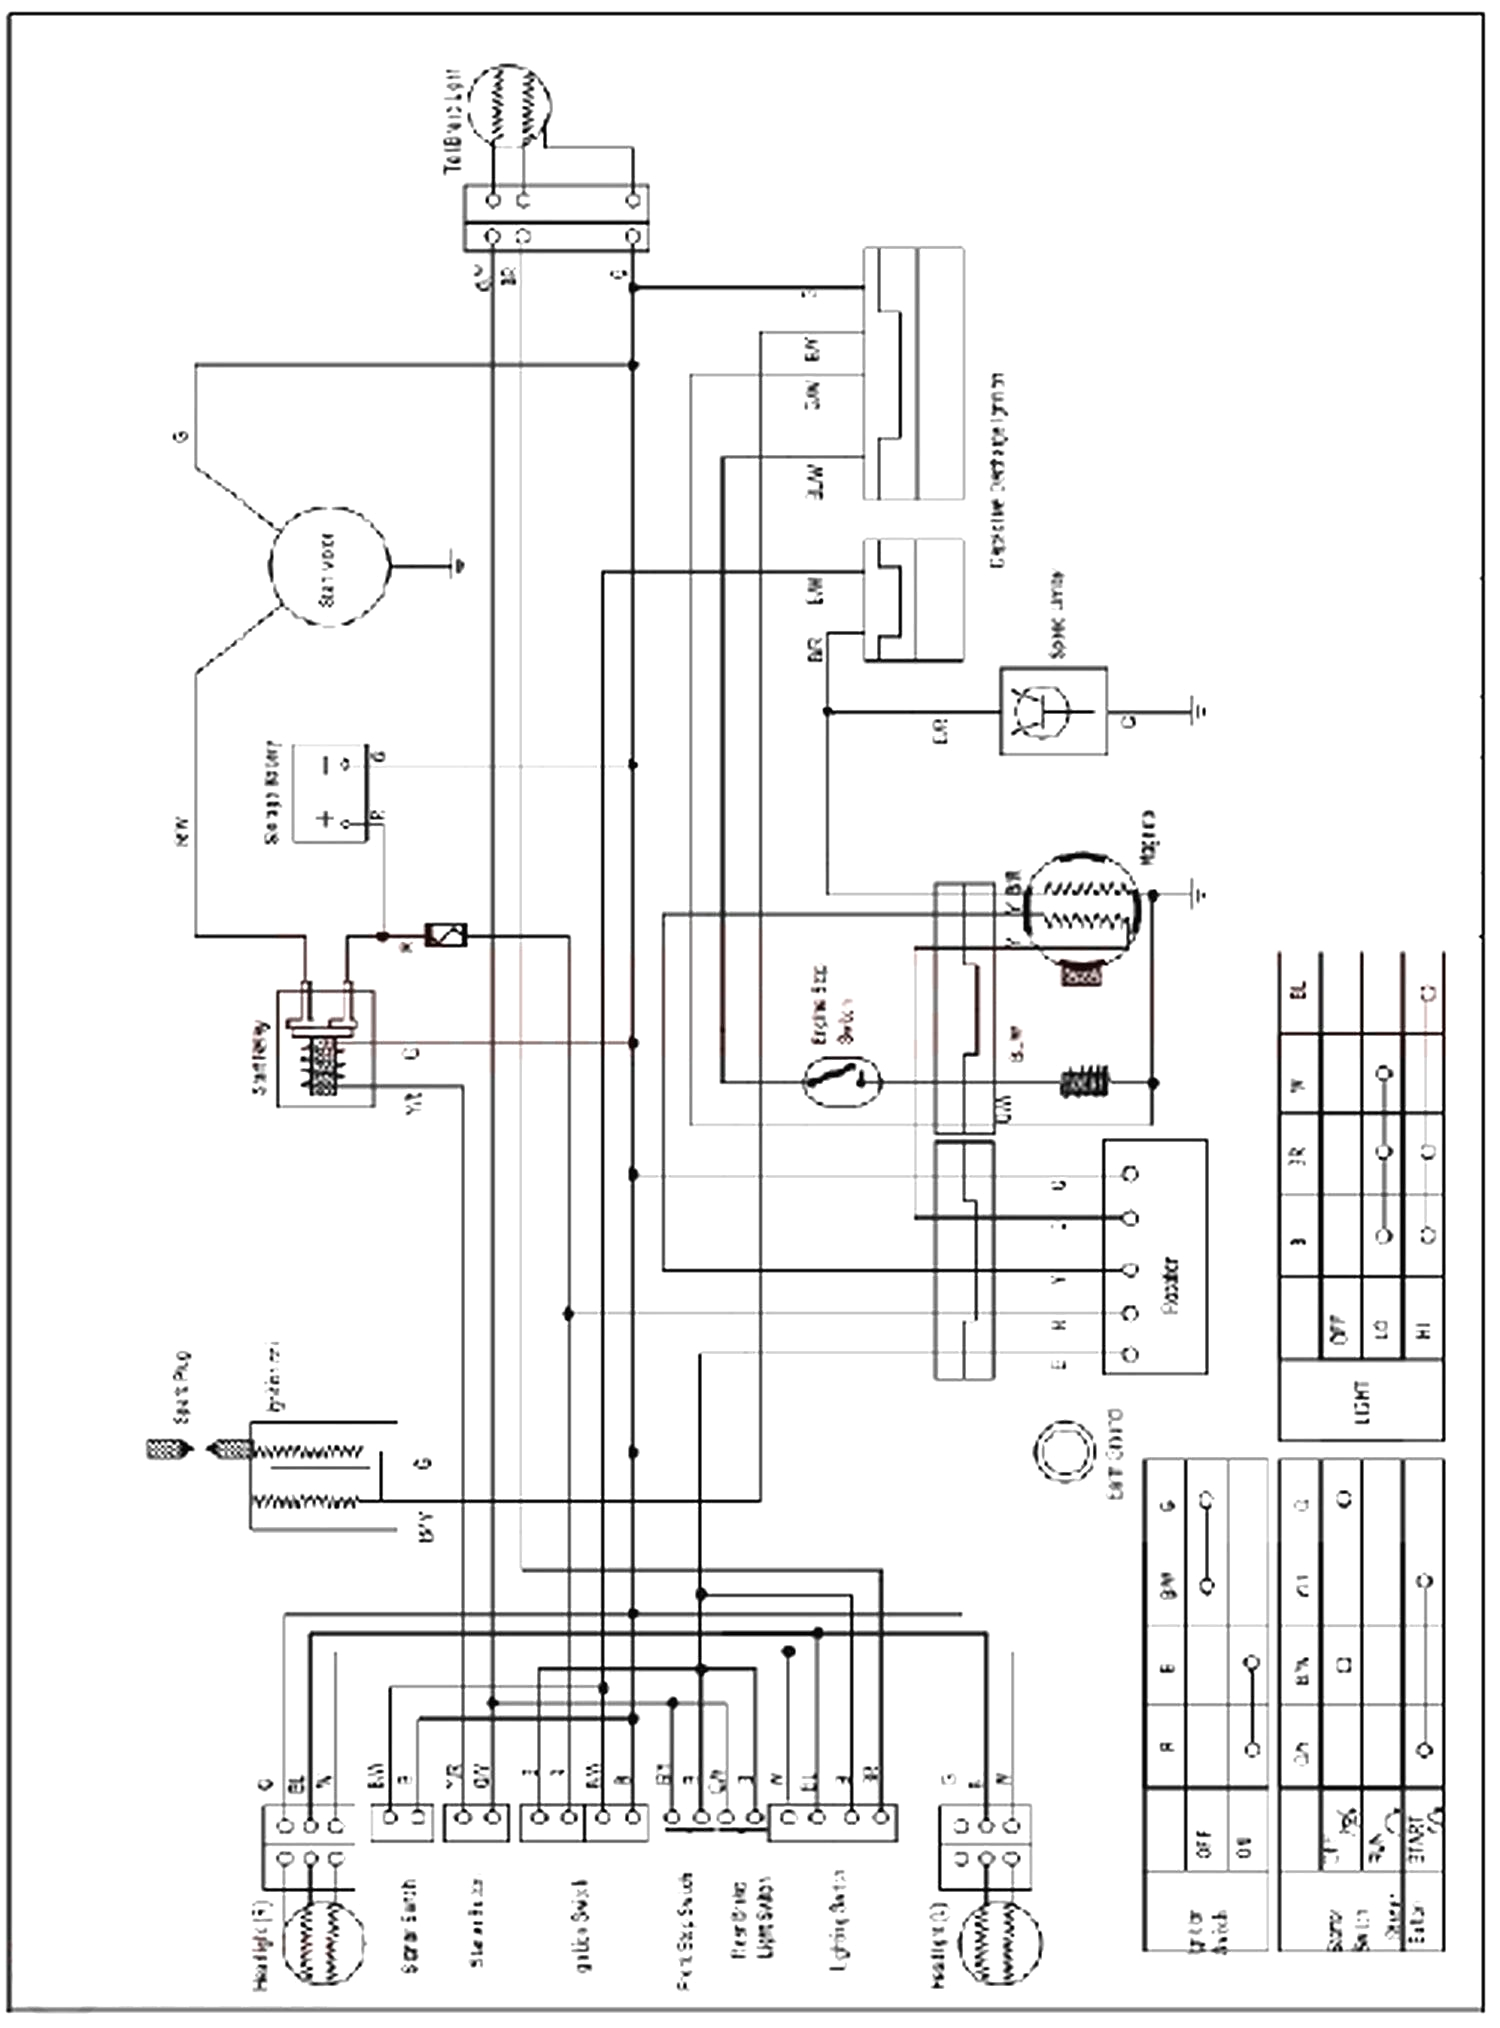 baja 150 electrical diagram wiring diagram datasourcebaja 90 wiring diagram manual e book baja 150 electrical